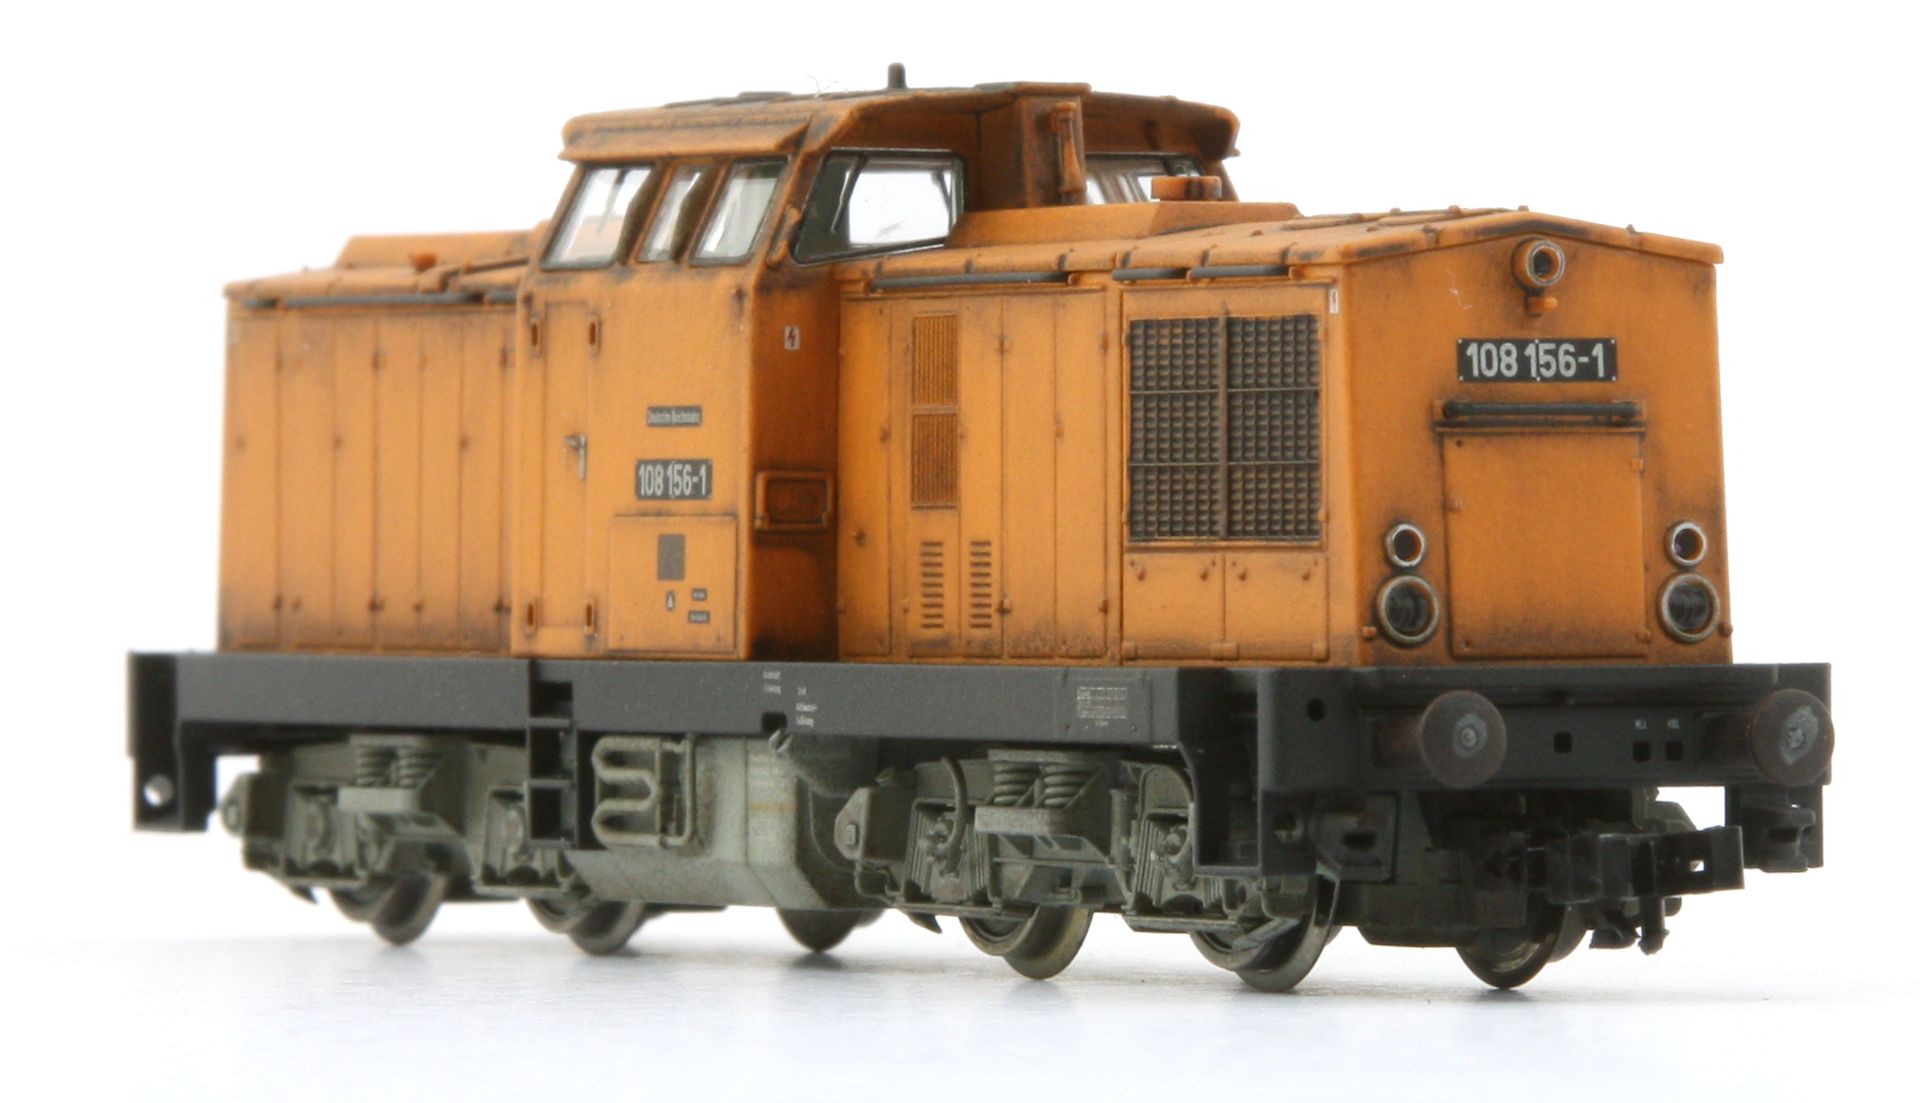 Saxonia 120098 - Diesellok 108 156-1, DR, Ep.IV, gealtert